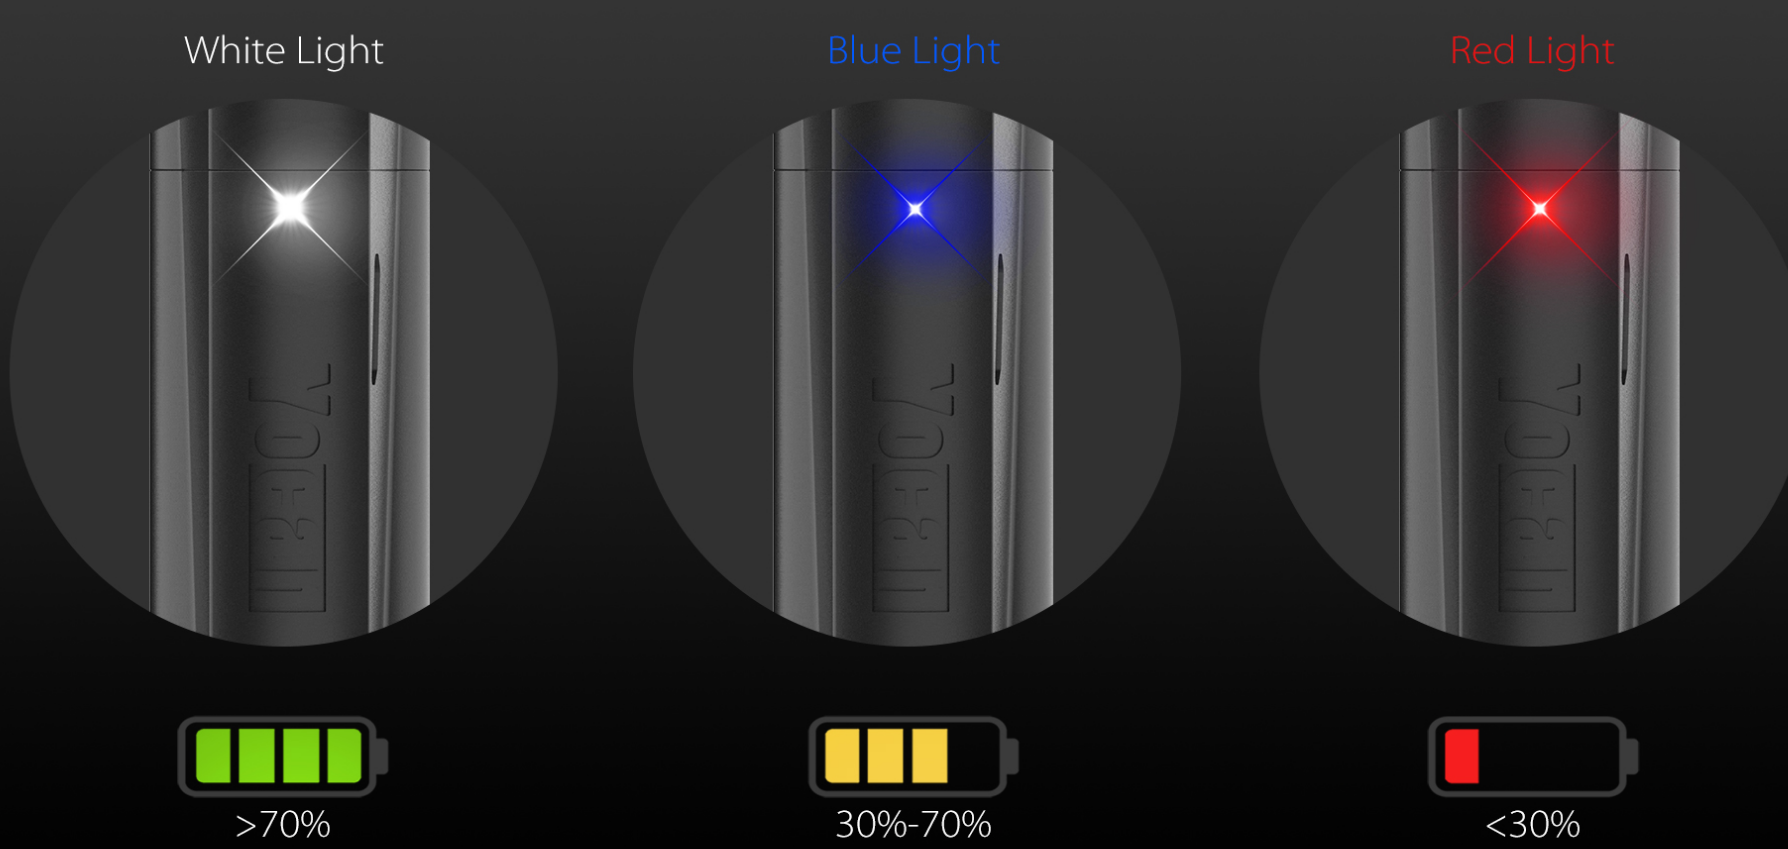 Yocan LIT indicator light show battery status 20210318103229.png